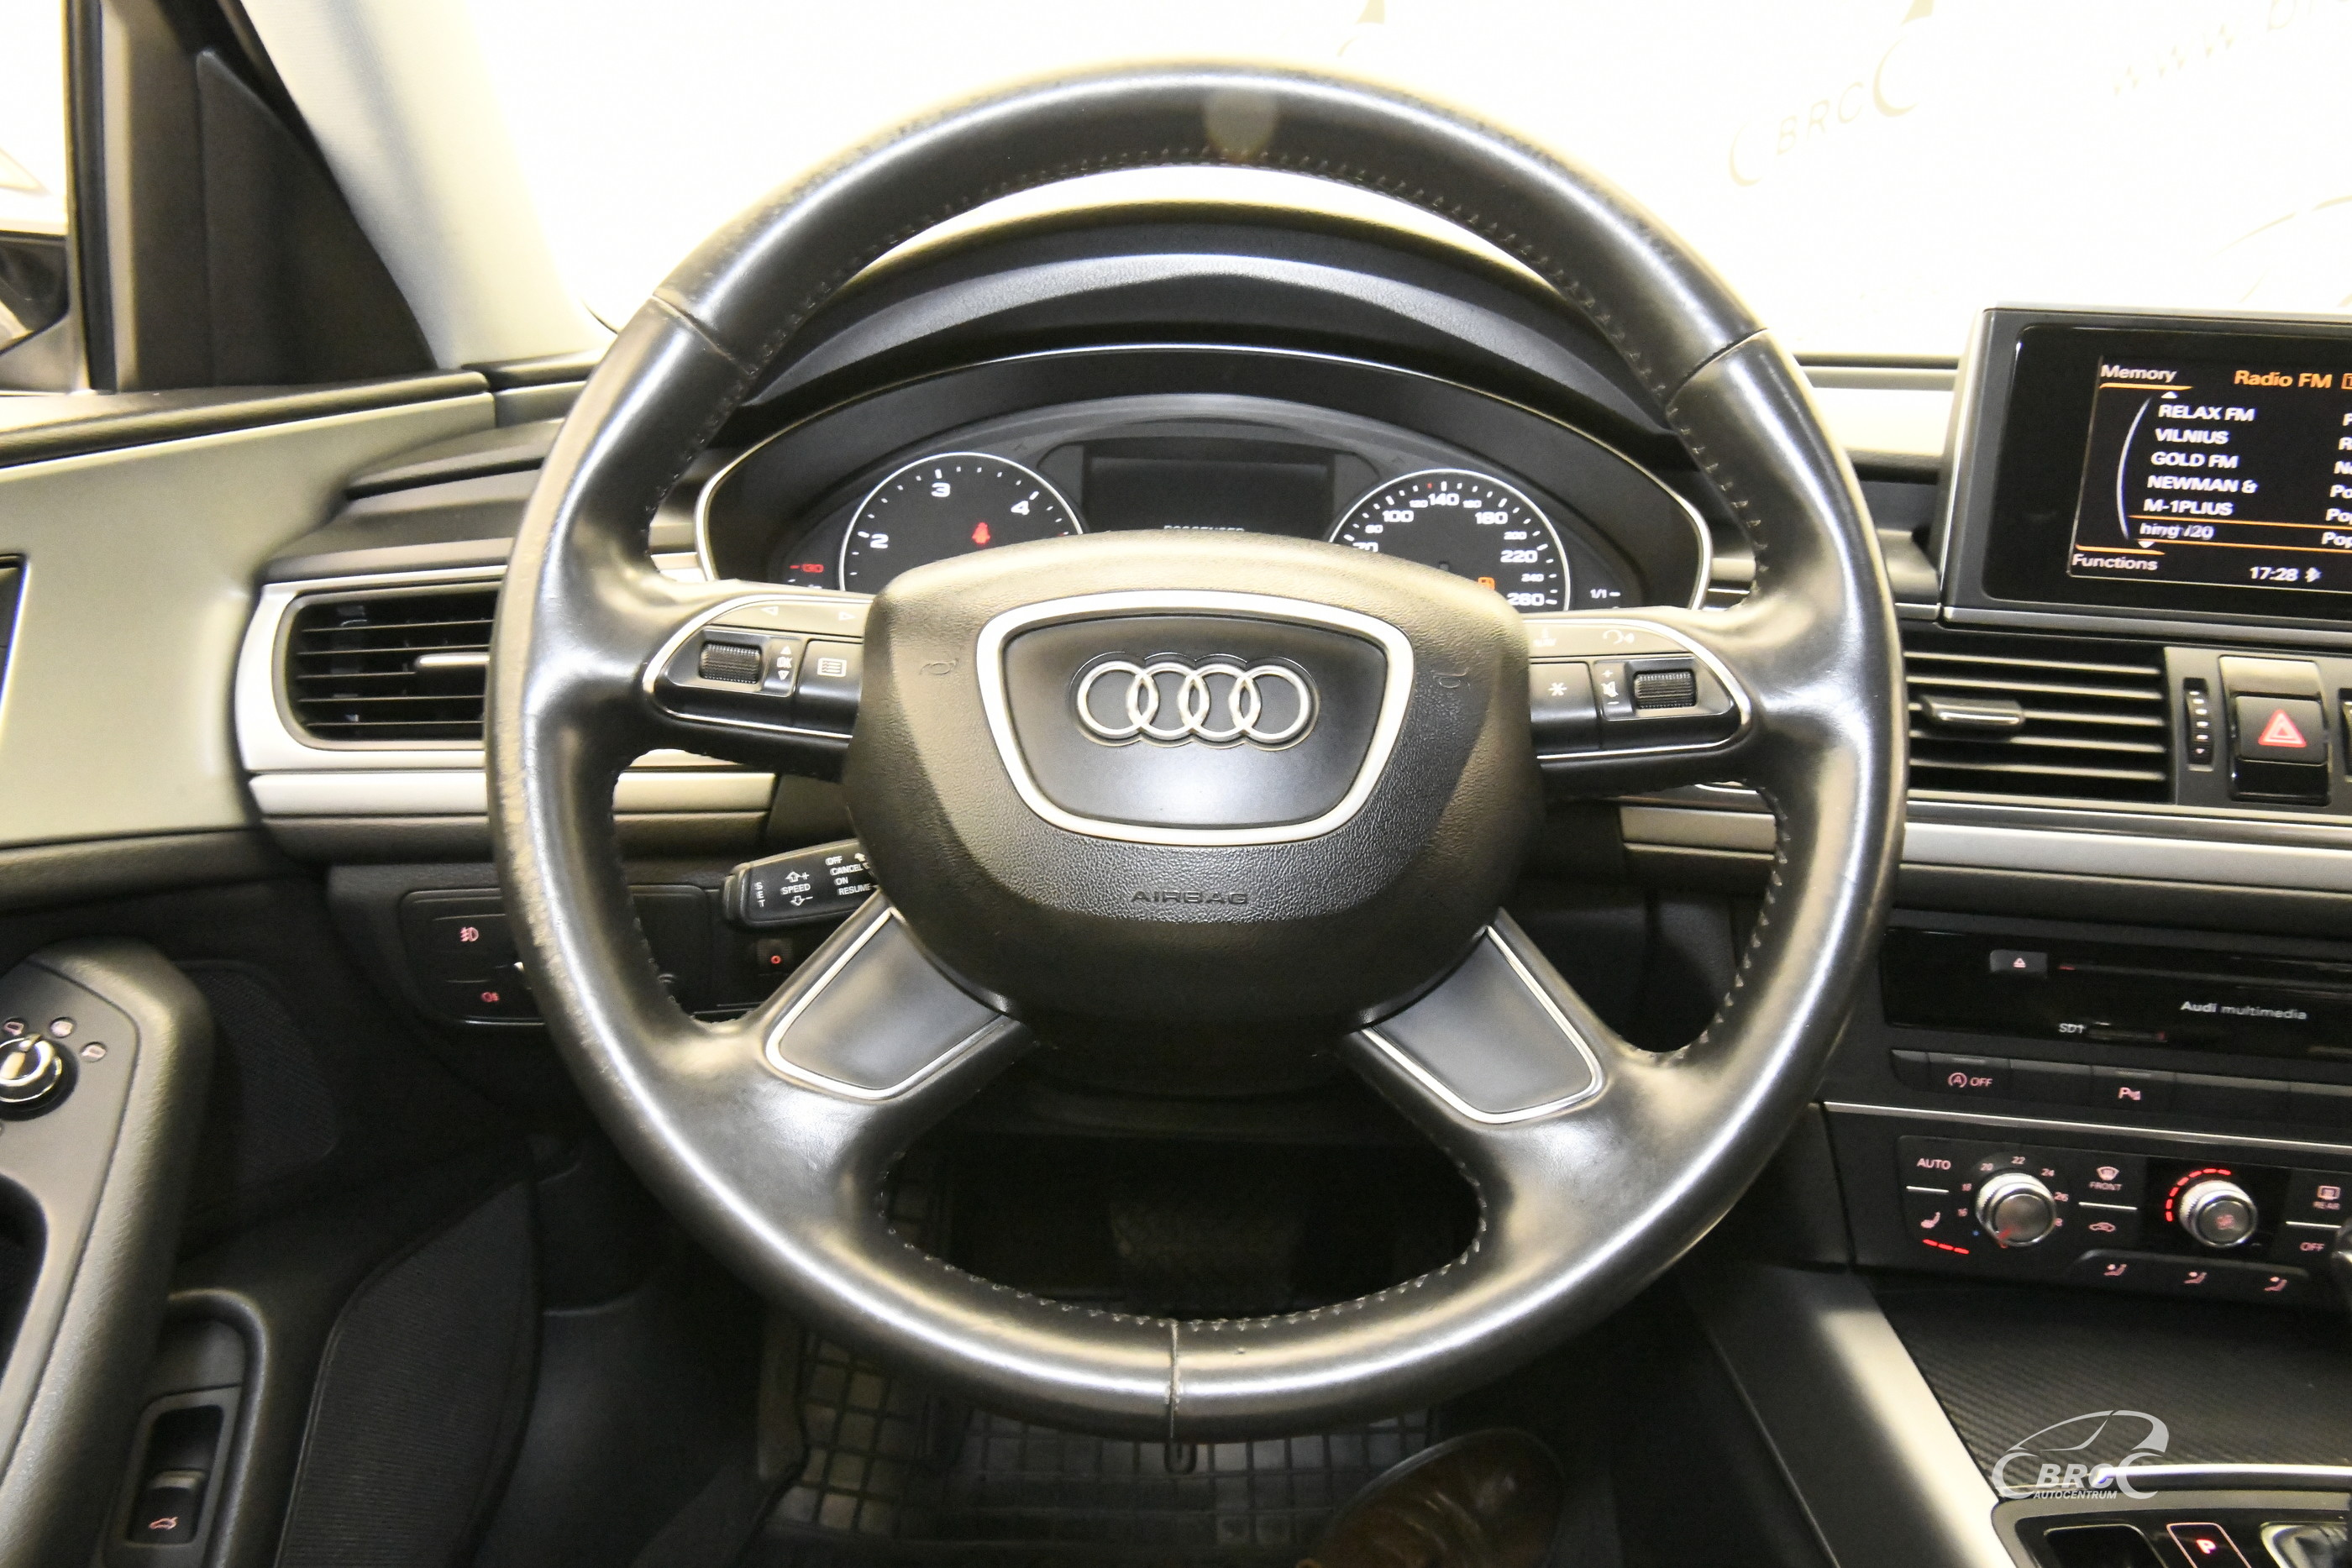 Audi A6 2.0 TDI Avant Automatas